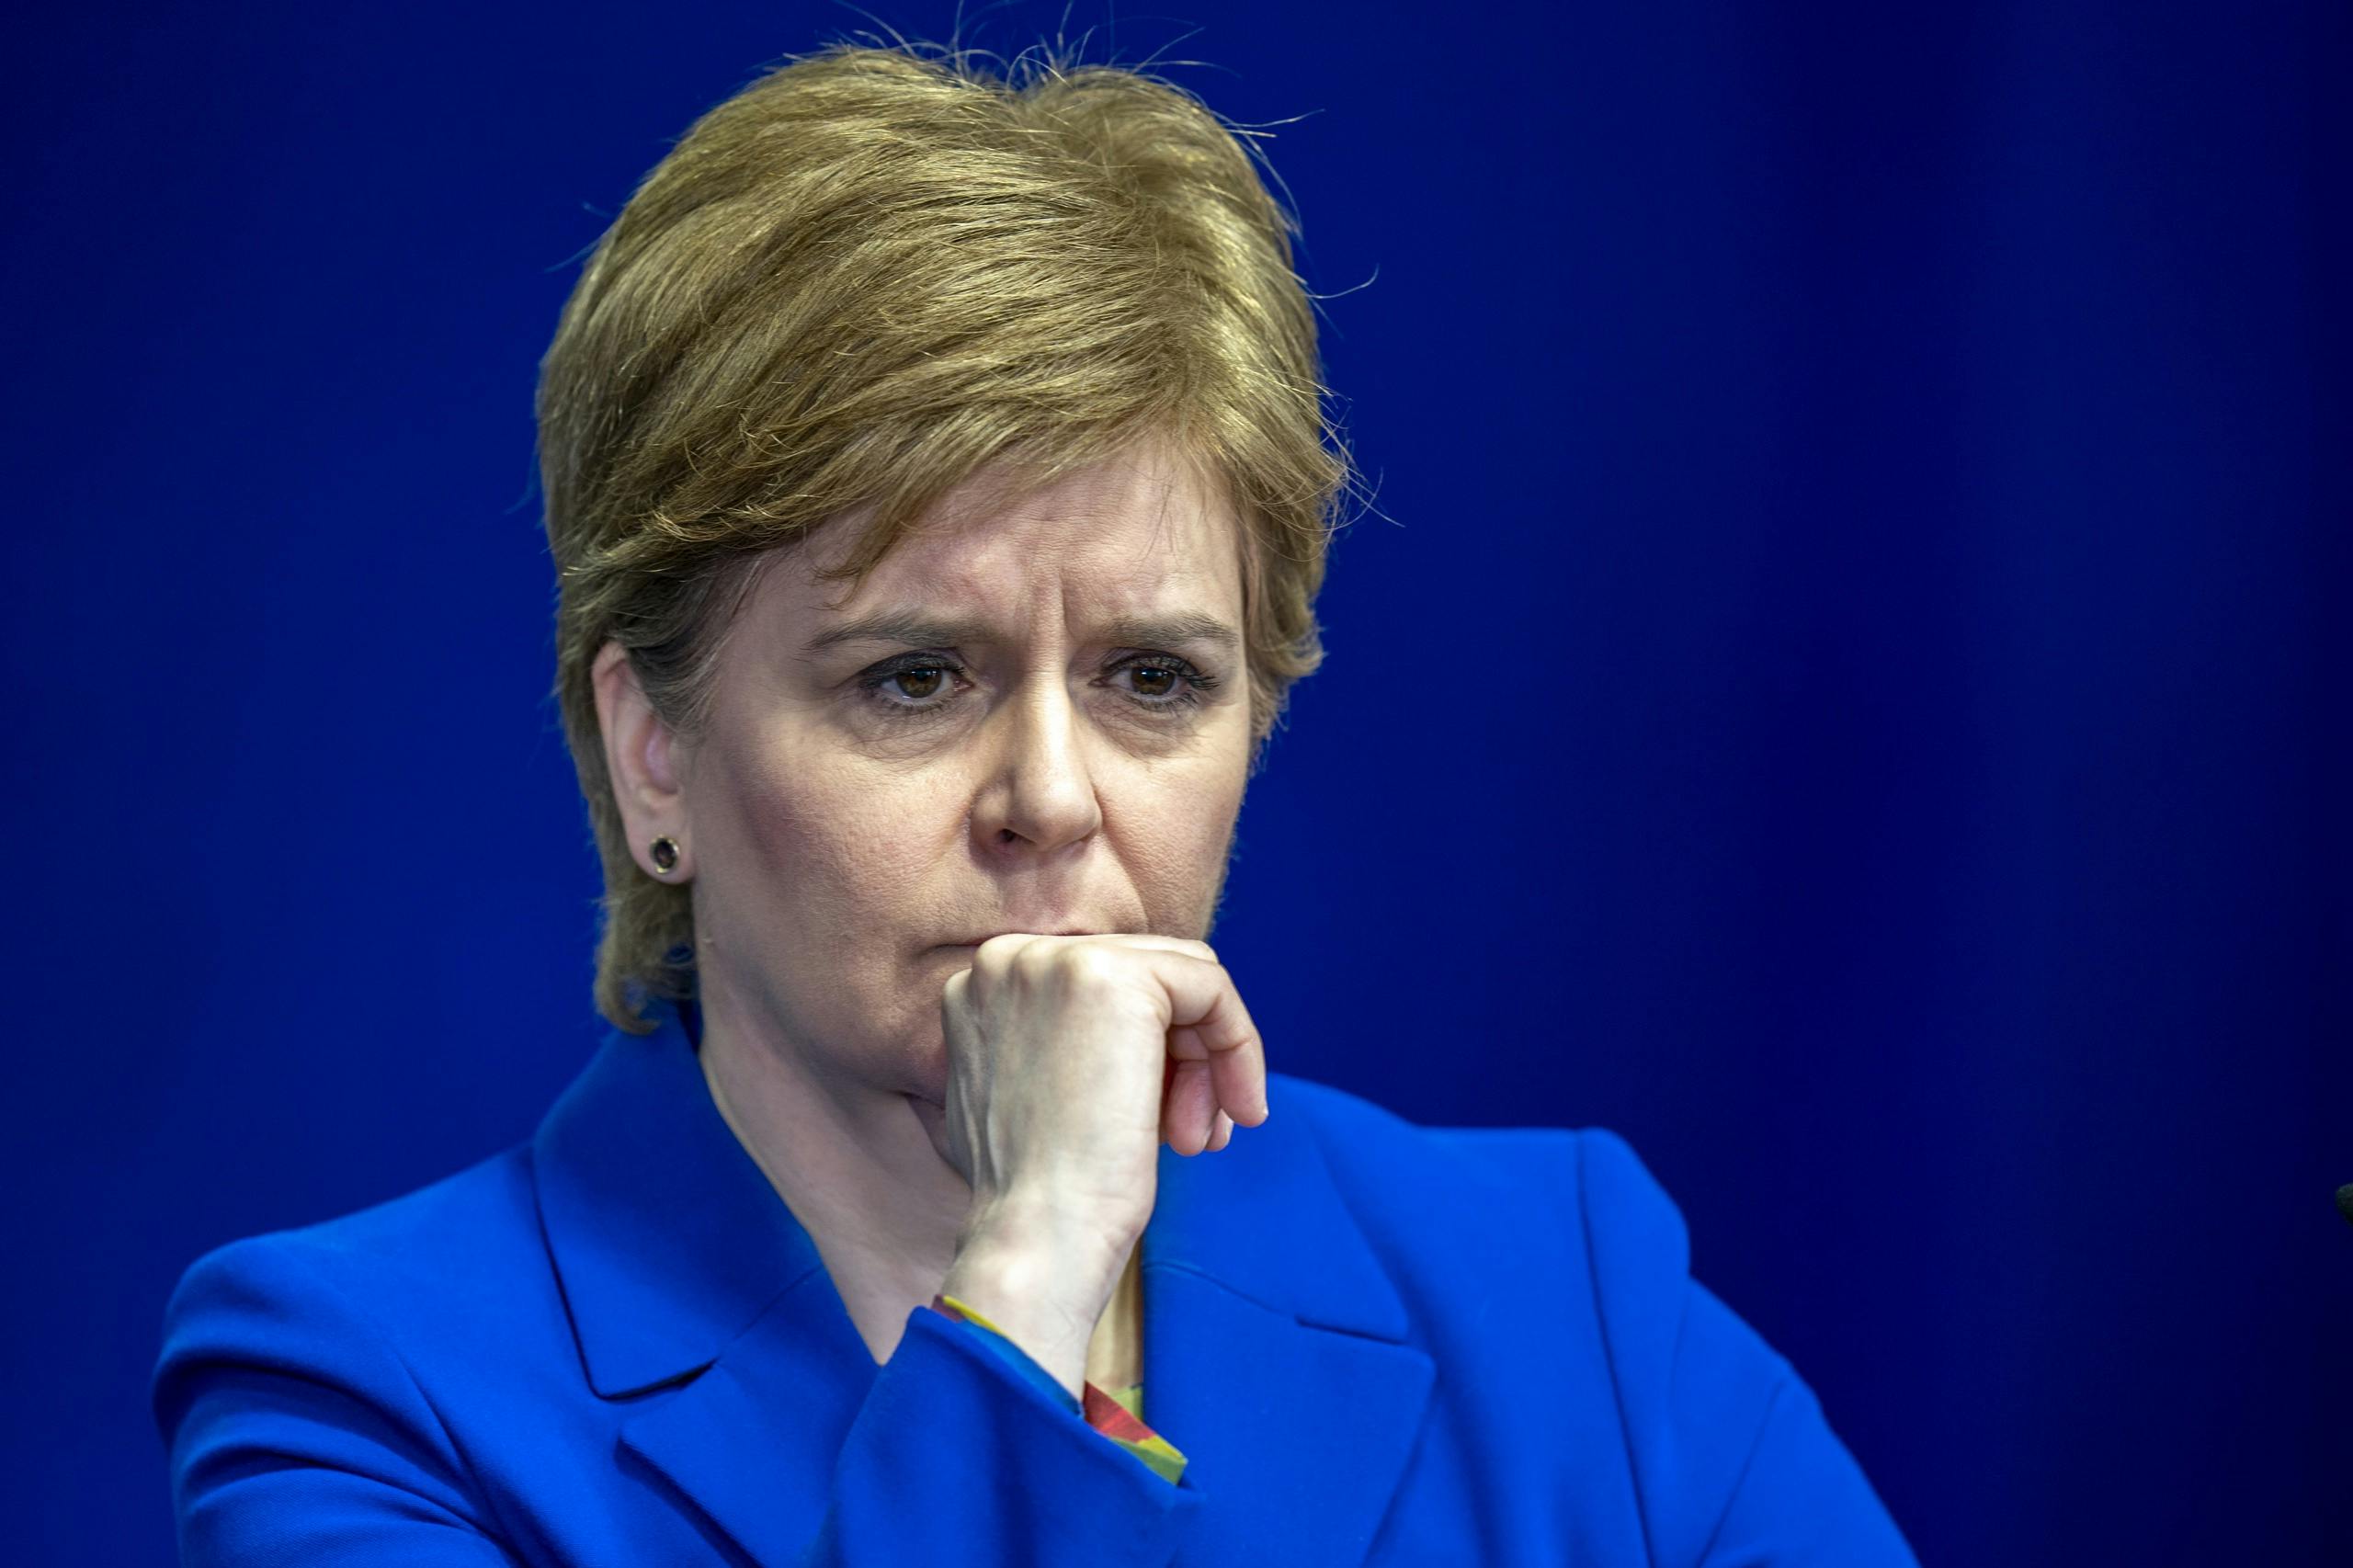 Sturgeon’s struggle for Scottish independence has foundered